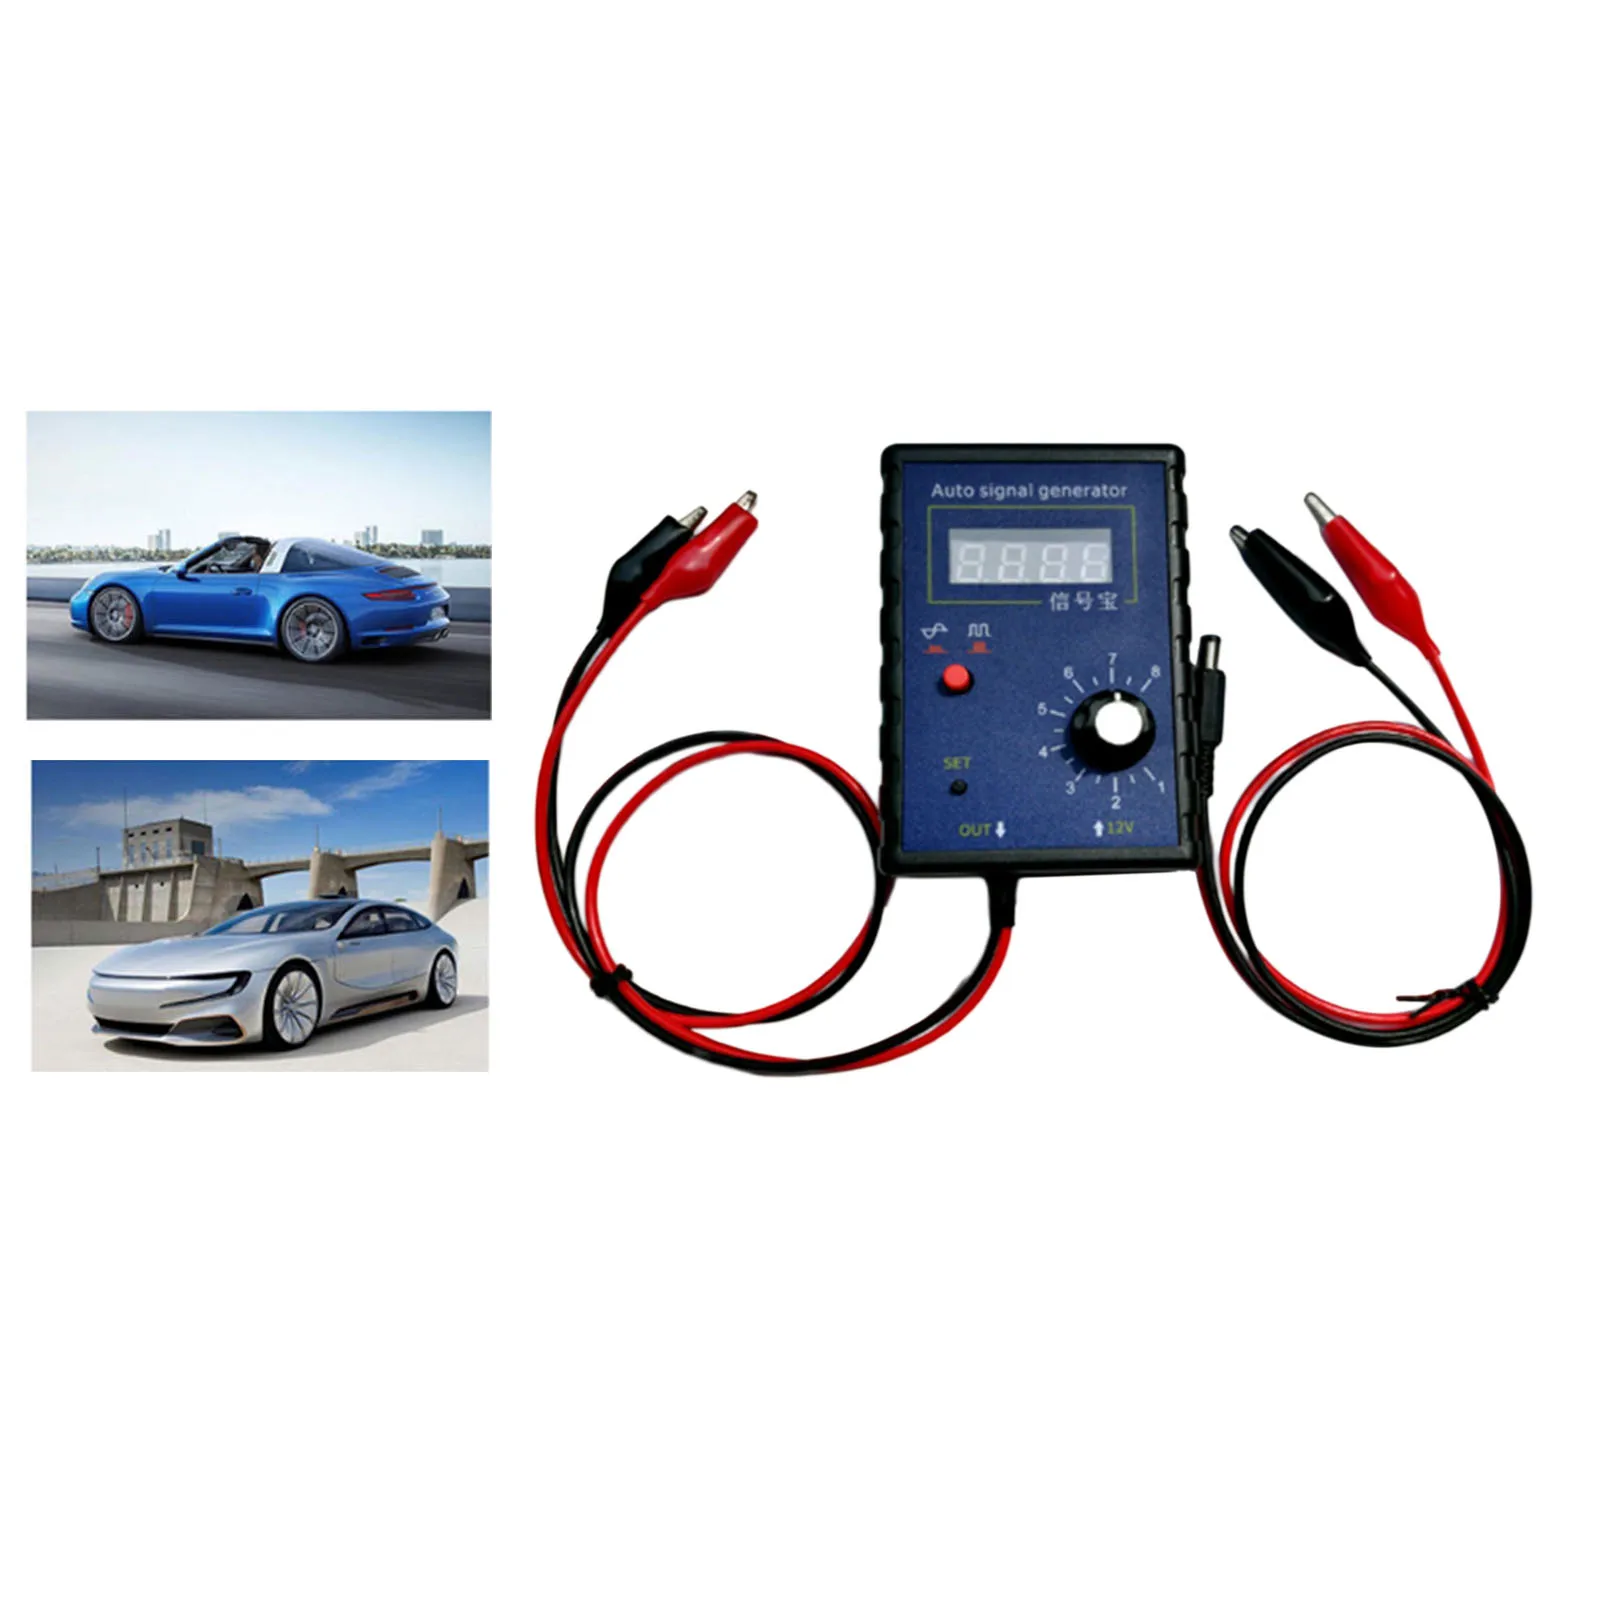 Portable Auto Vehicle Signal Generator Automobile signal generator sensor detector